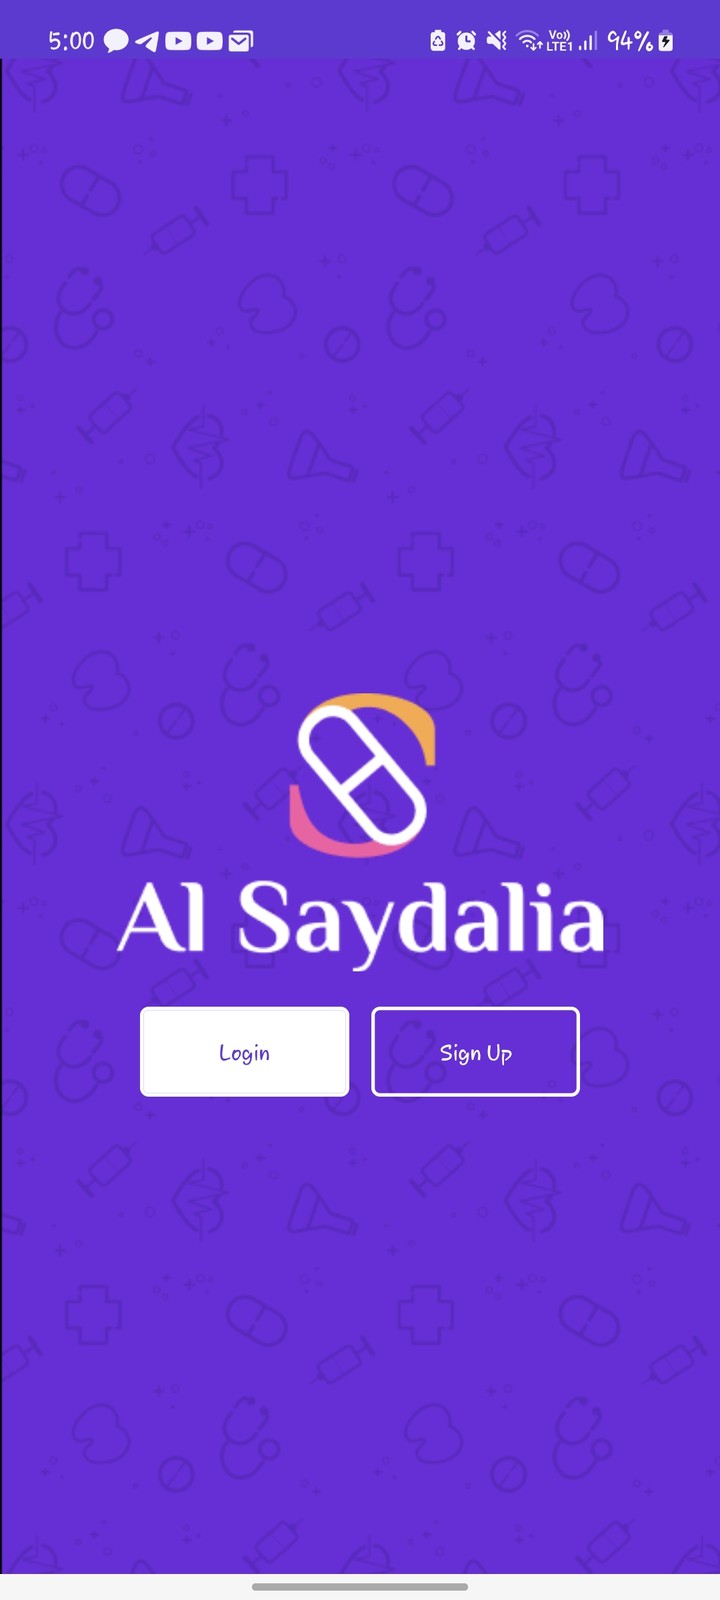 Al Saydalia